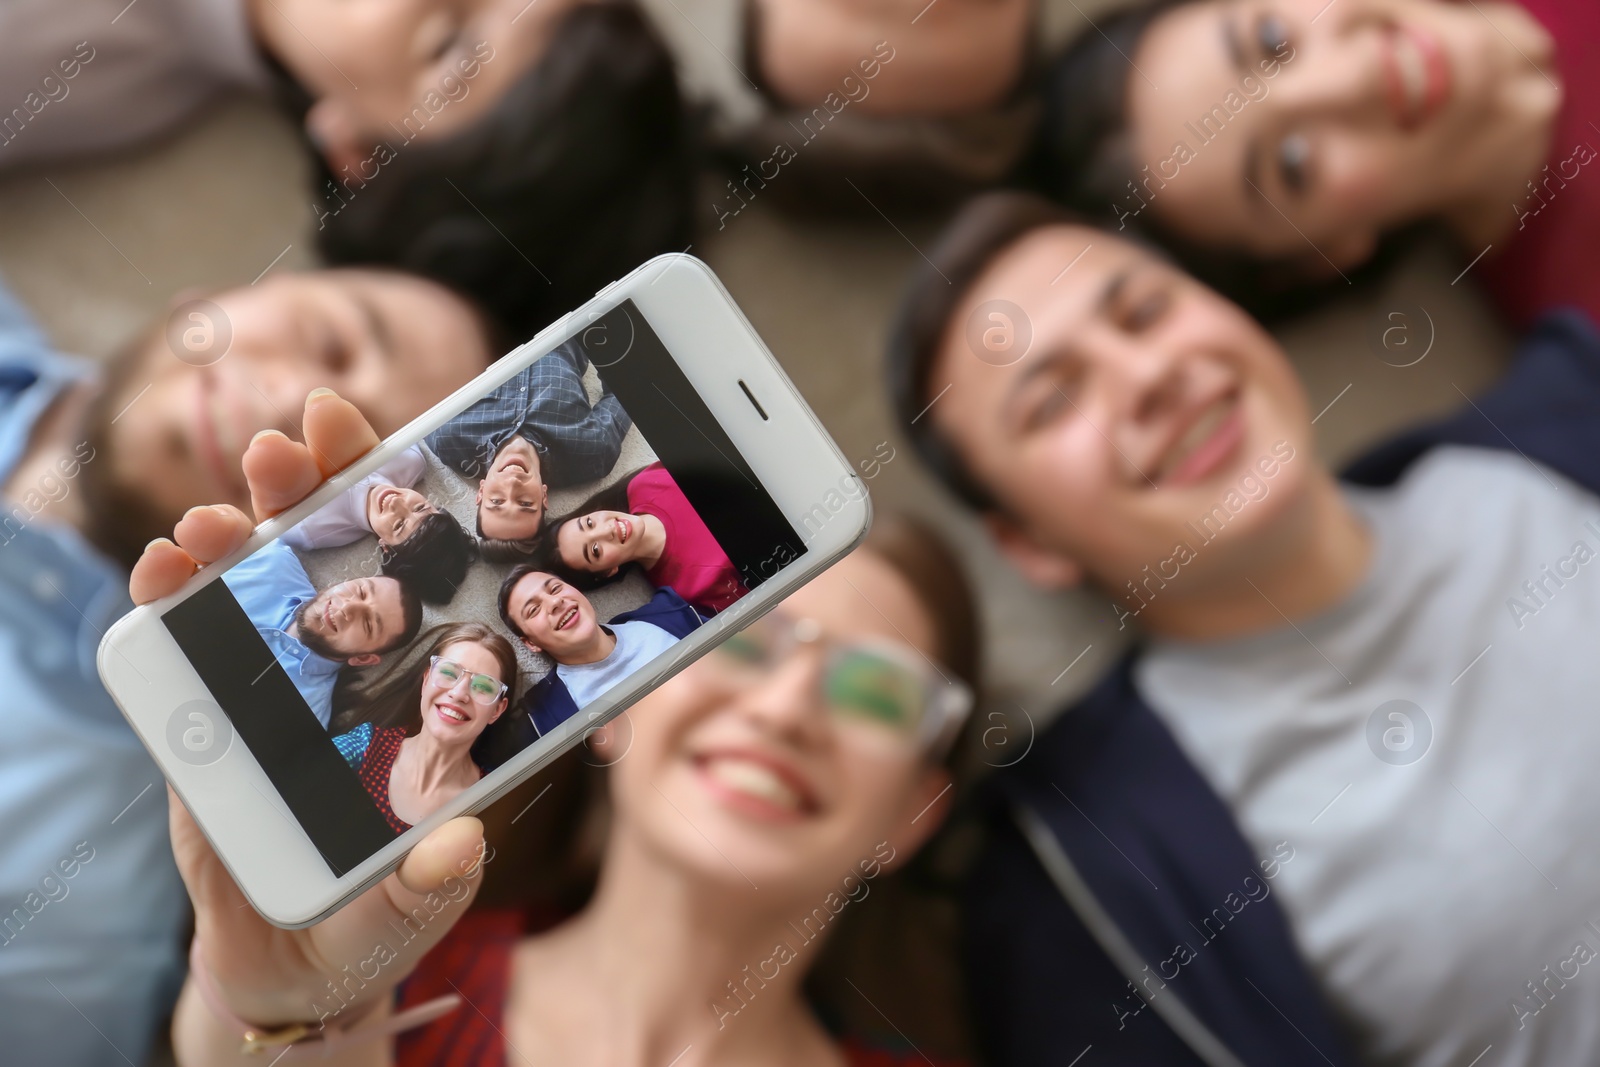 Photo of Happy friends taking selfie indoors